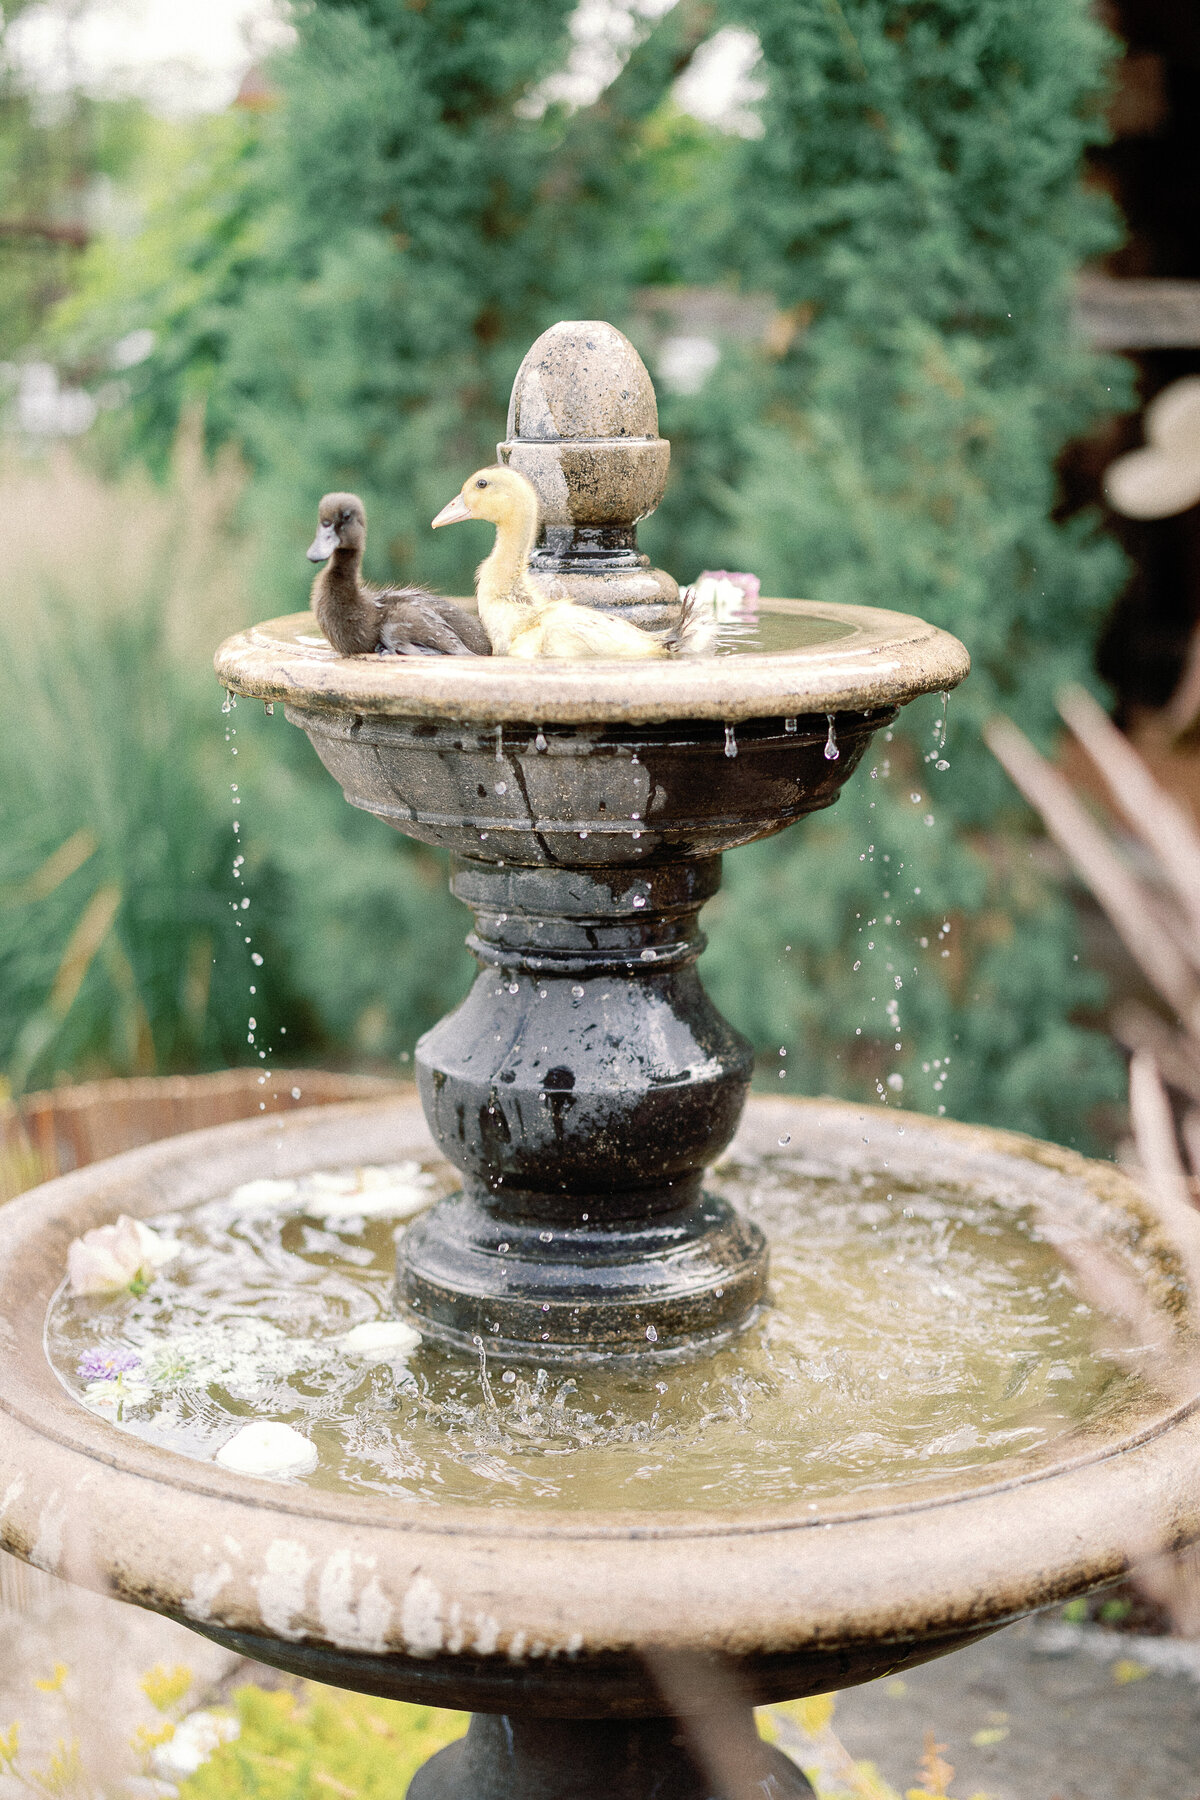 Baby ducks splash in fountain